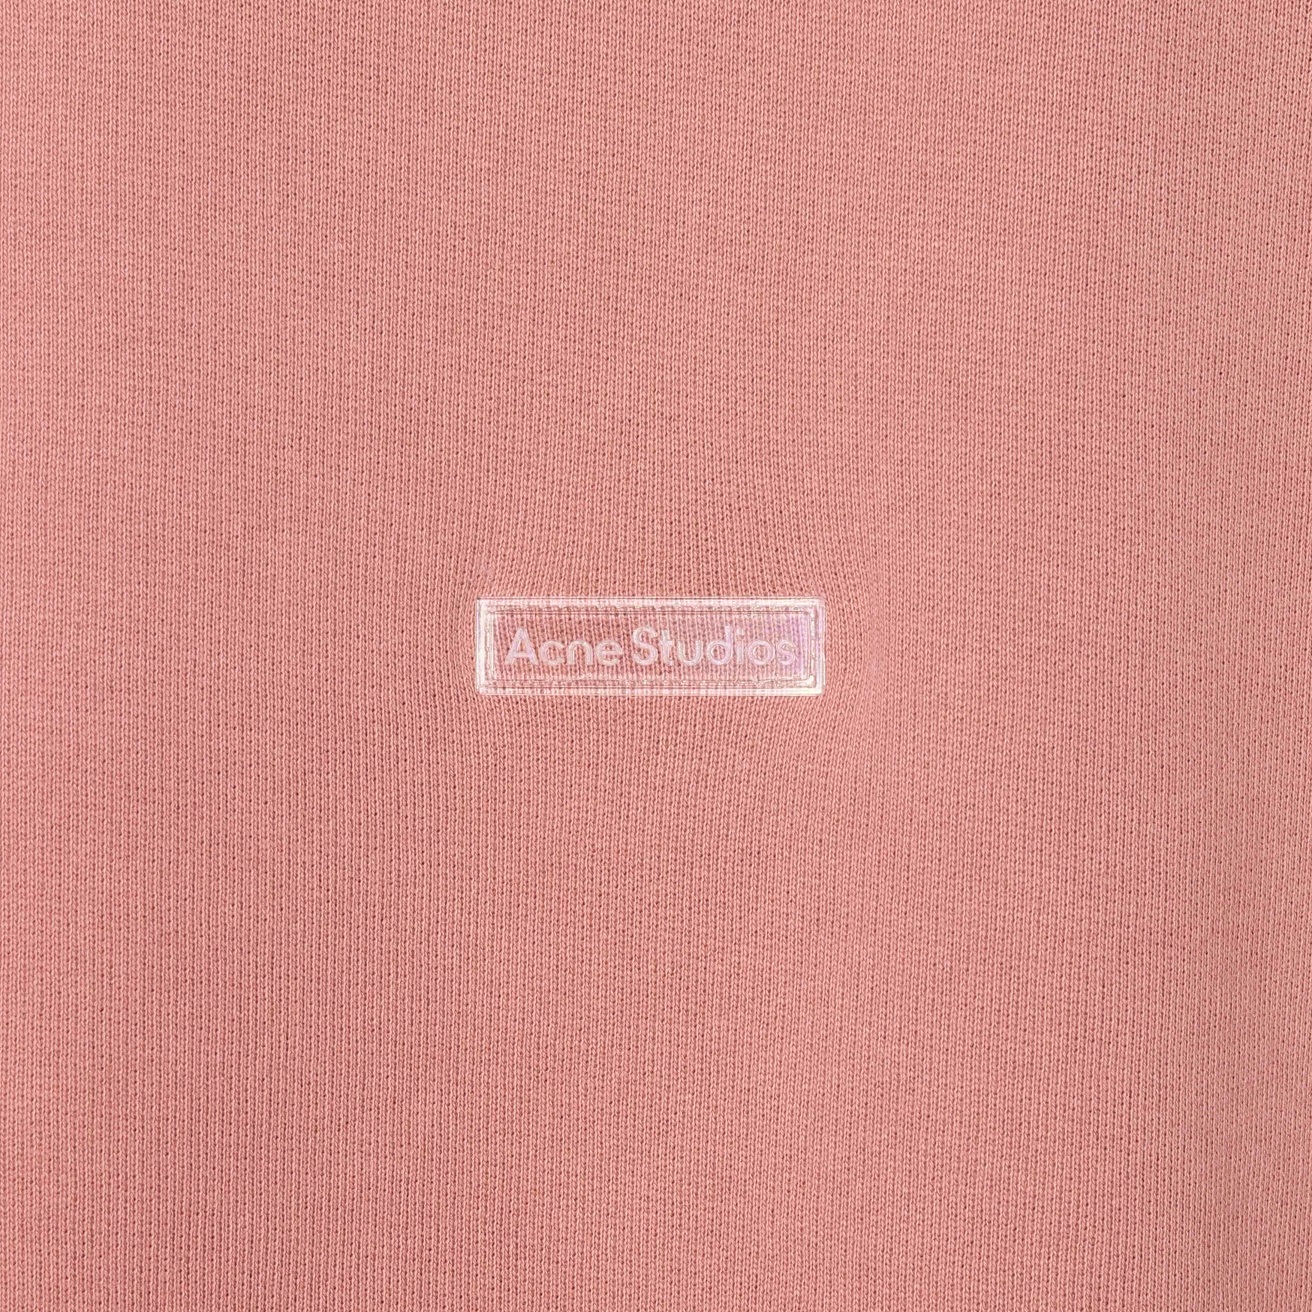 ACNE STUDIOS Vintage T-Shirt in Vintage Pink XS